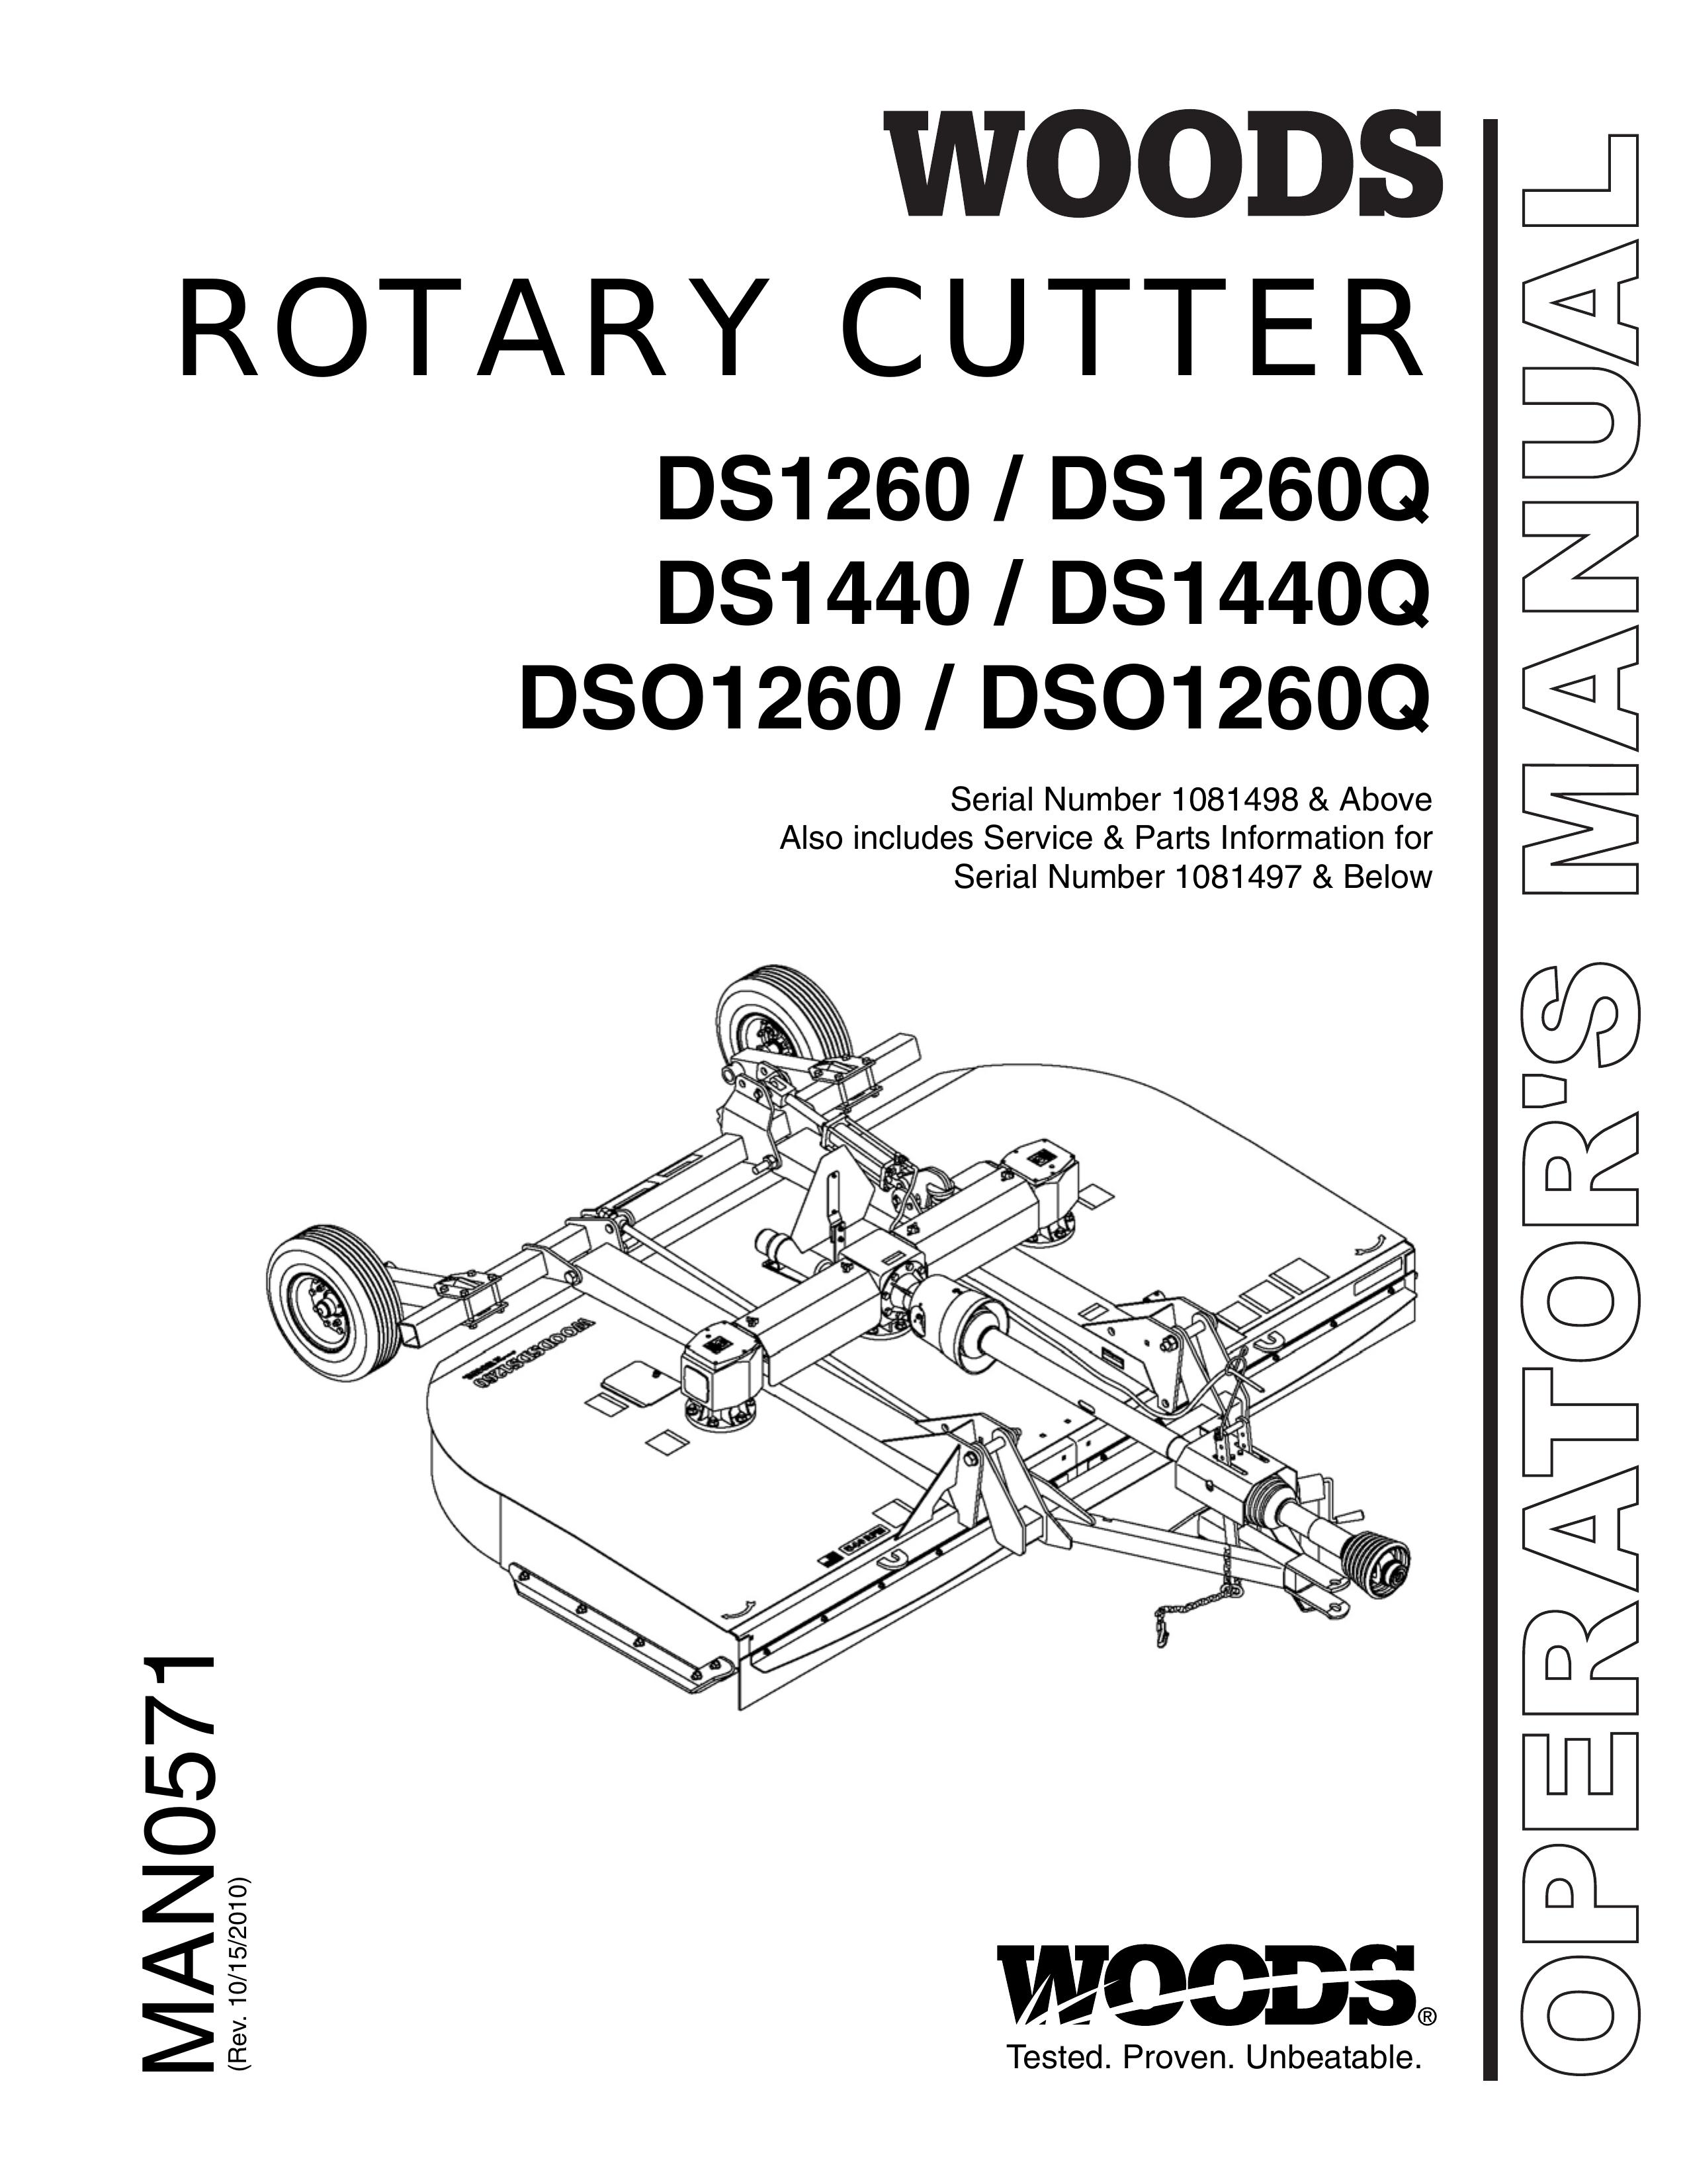 Woods Equipment DS1440Q Brush Cutter User Manual